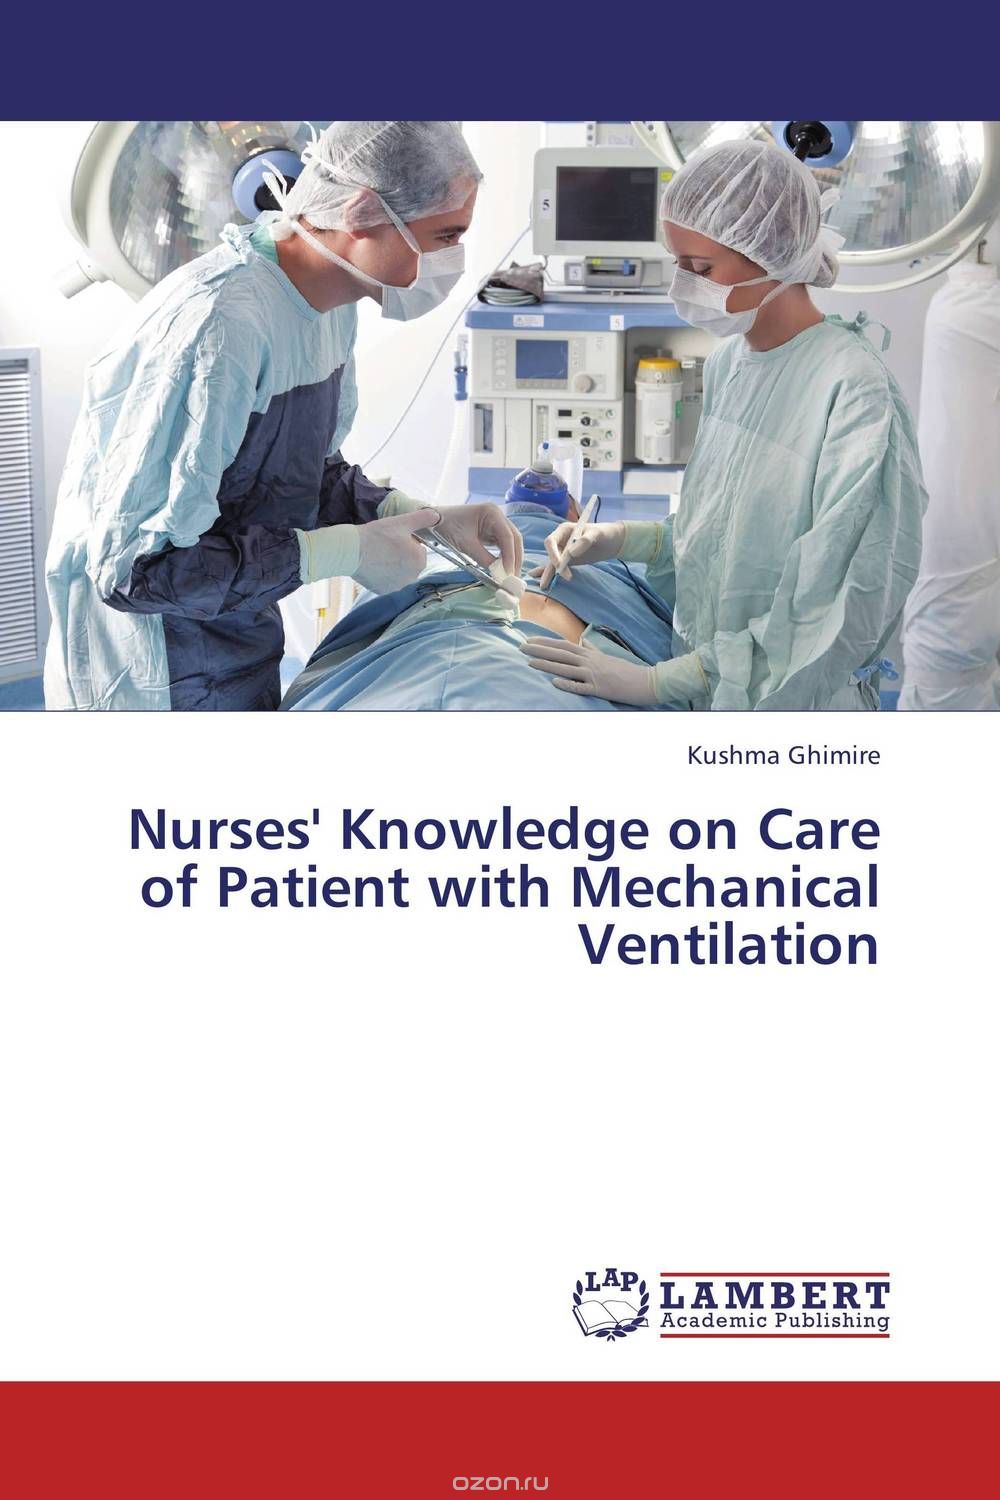 Скачать книгу "Nurses' Knowledge on Care of Patient with Mechanical Ventilation"